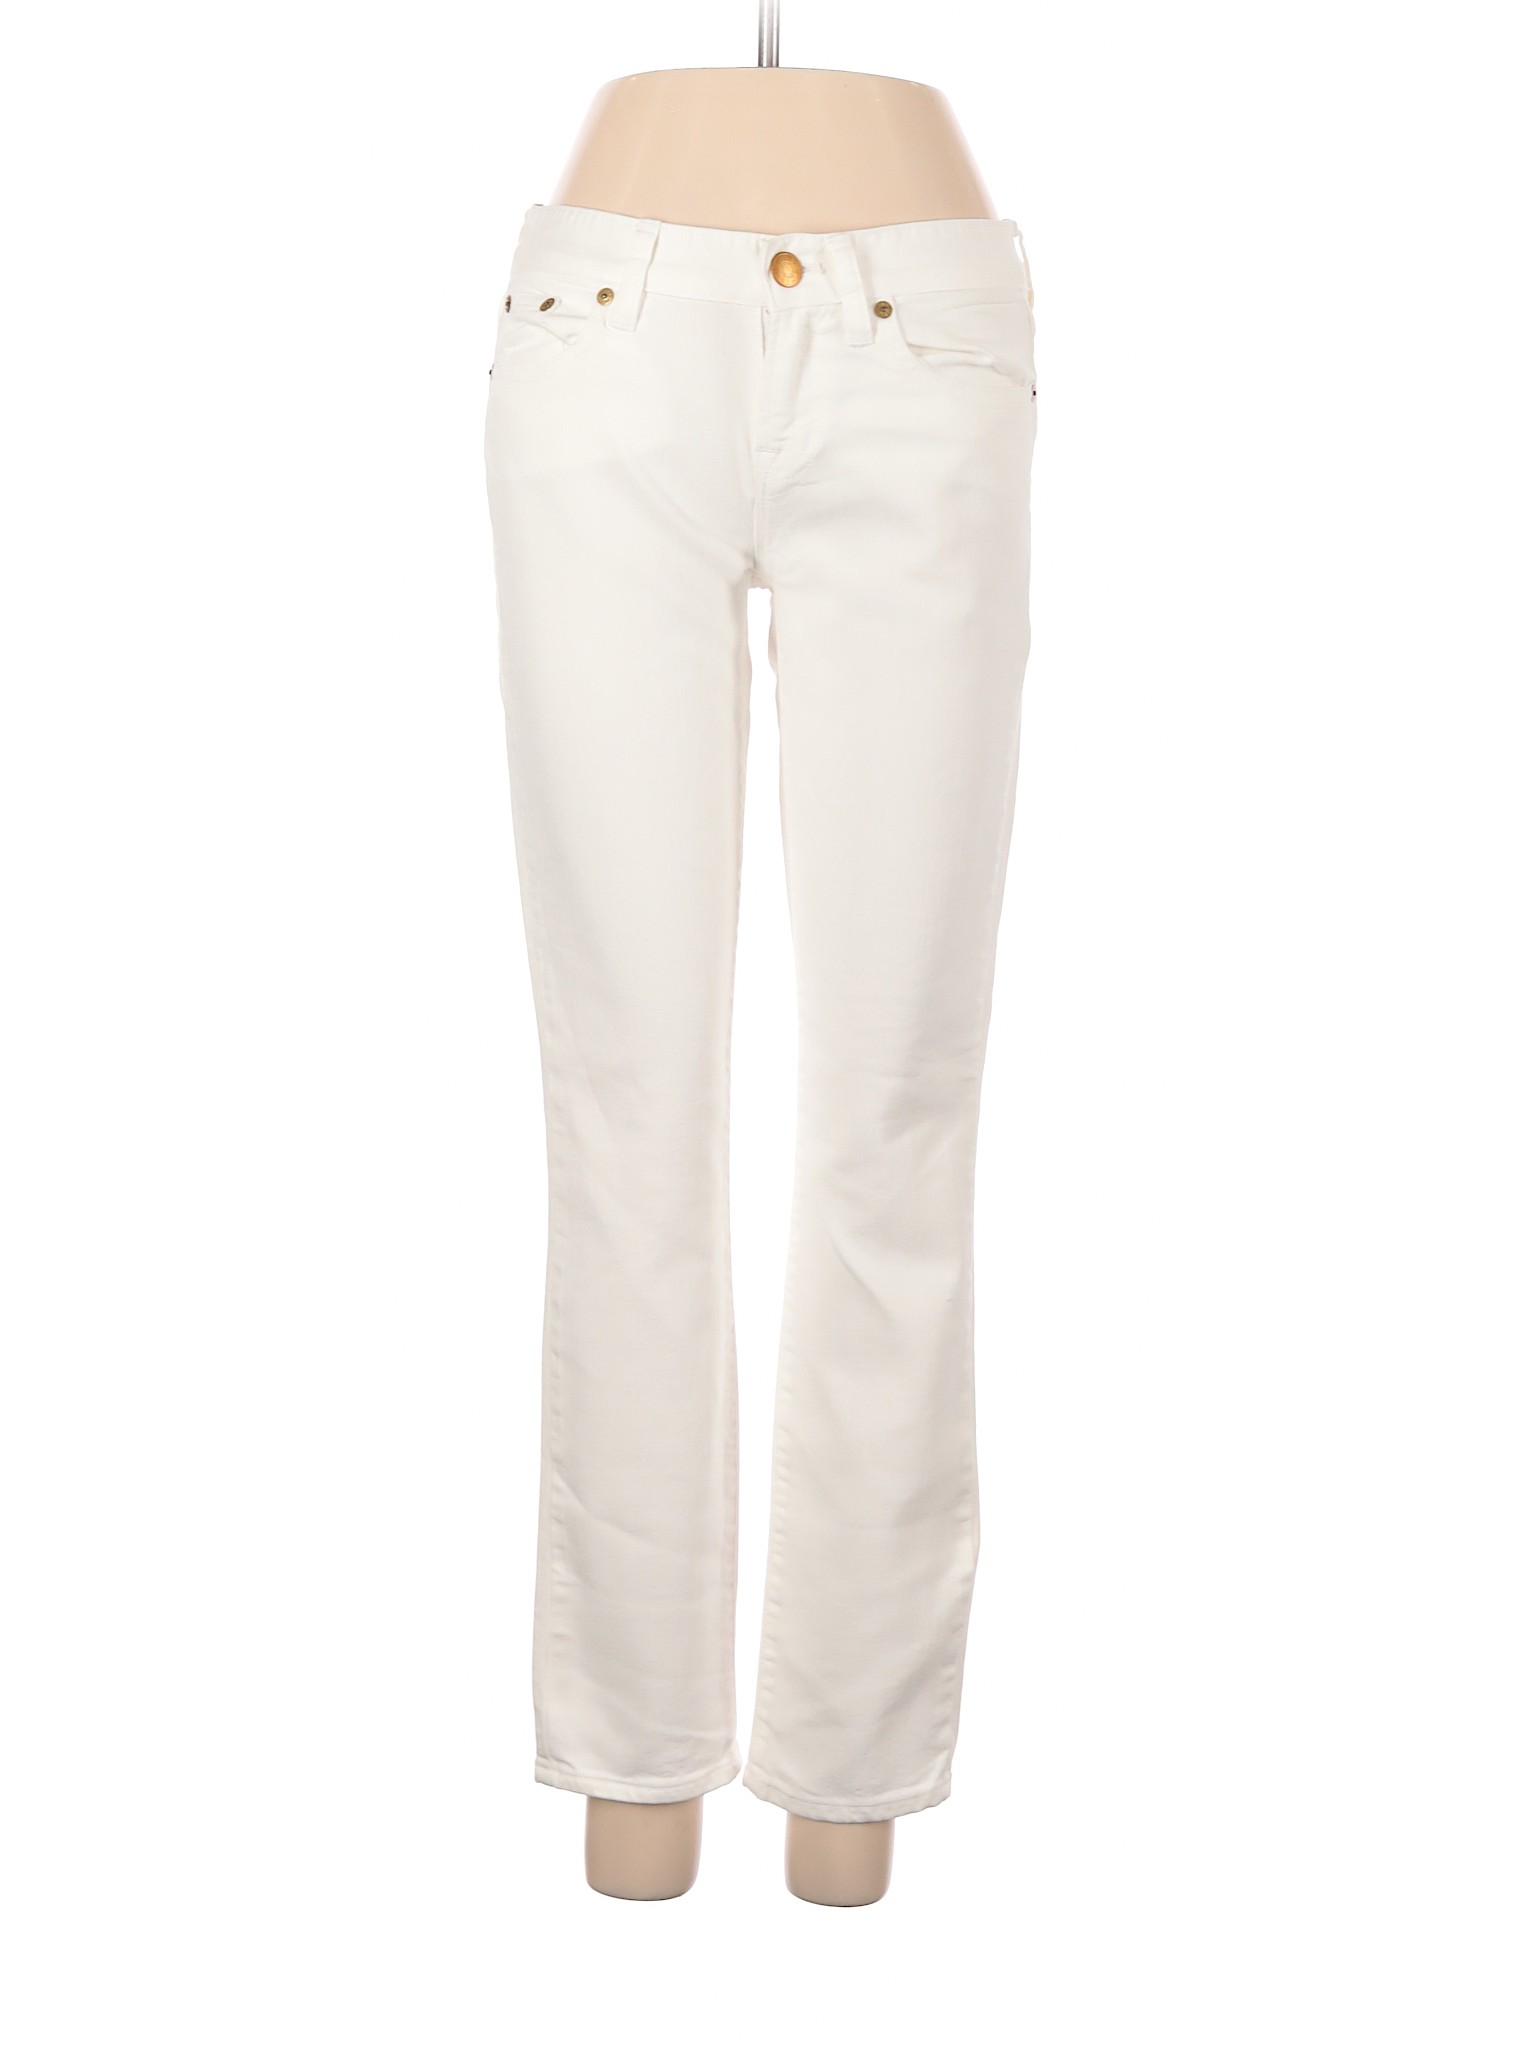 J.Crew Women White Jeans 27W | eBay